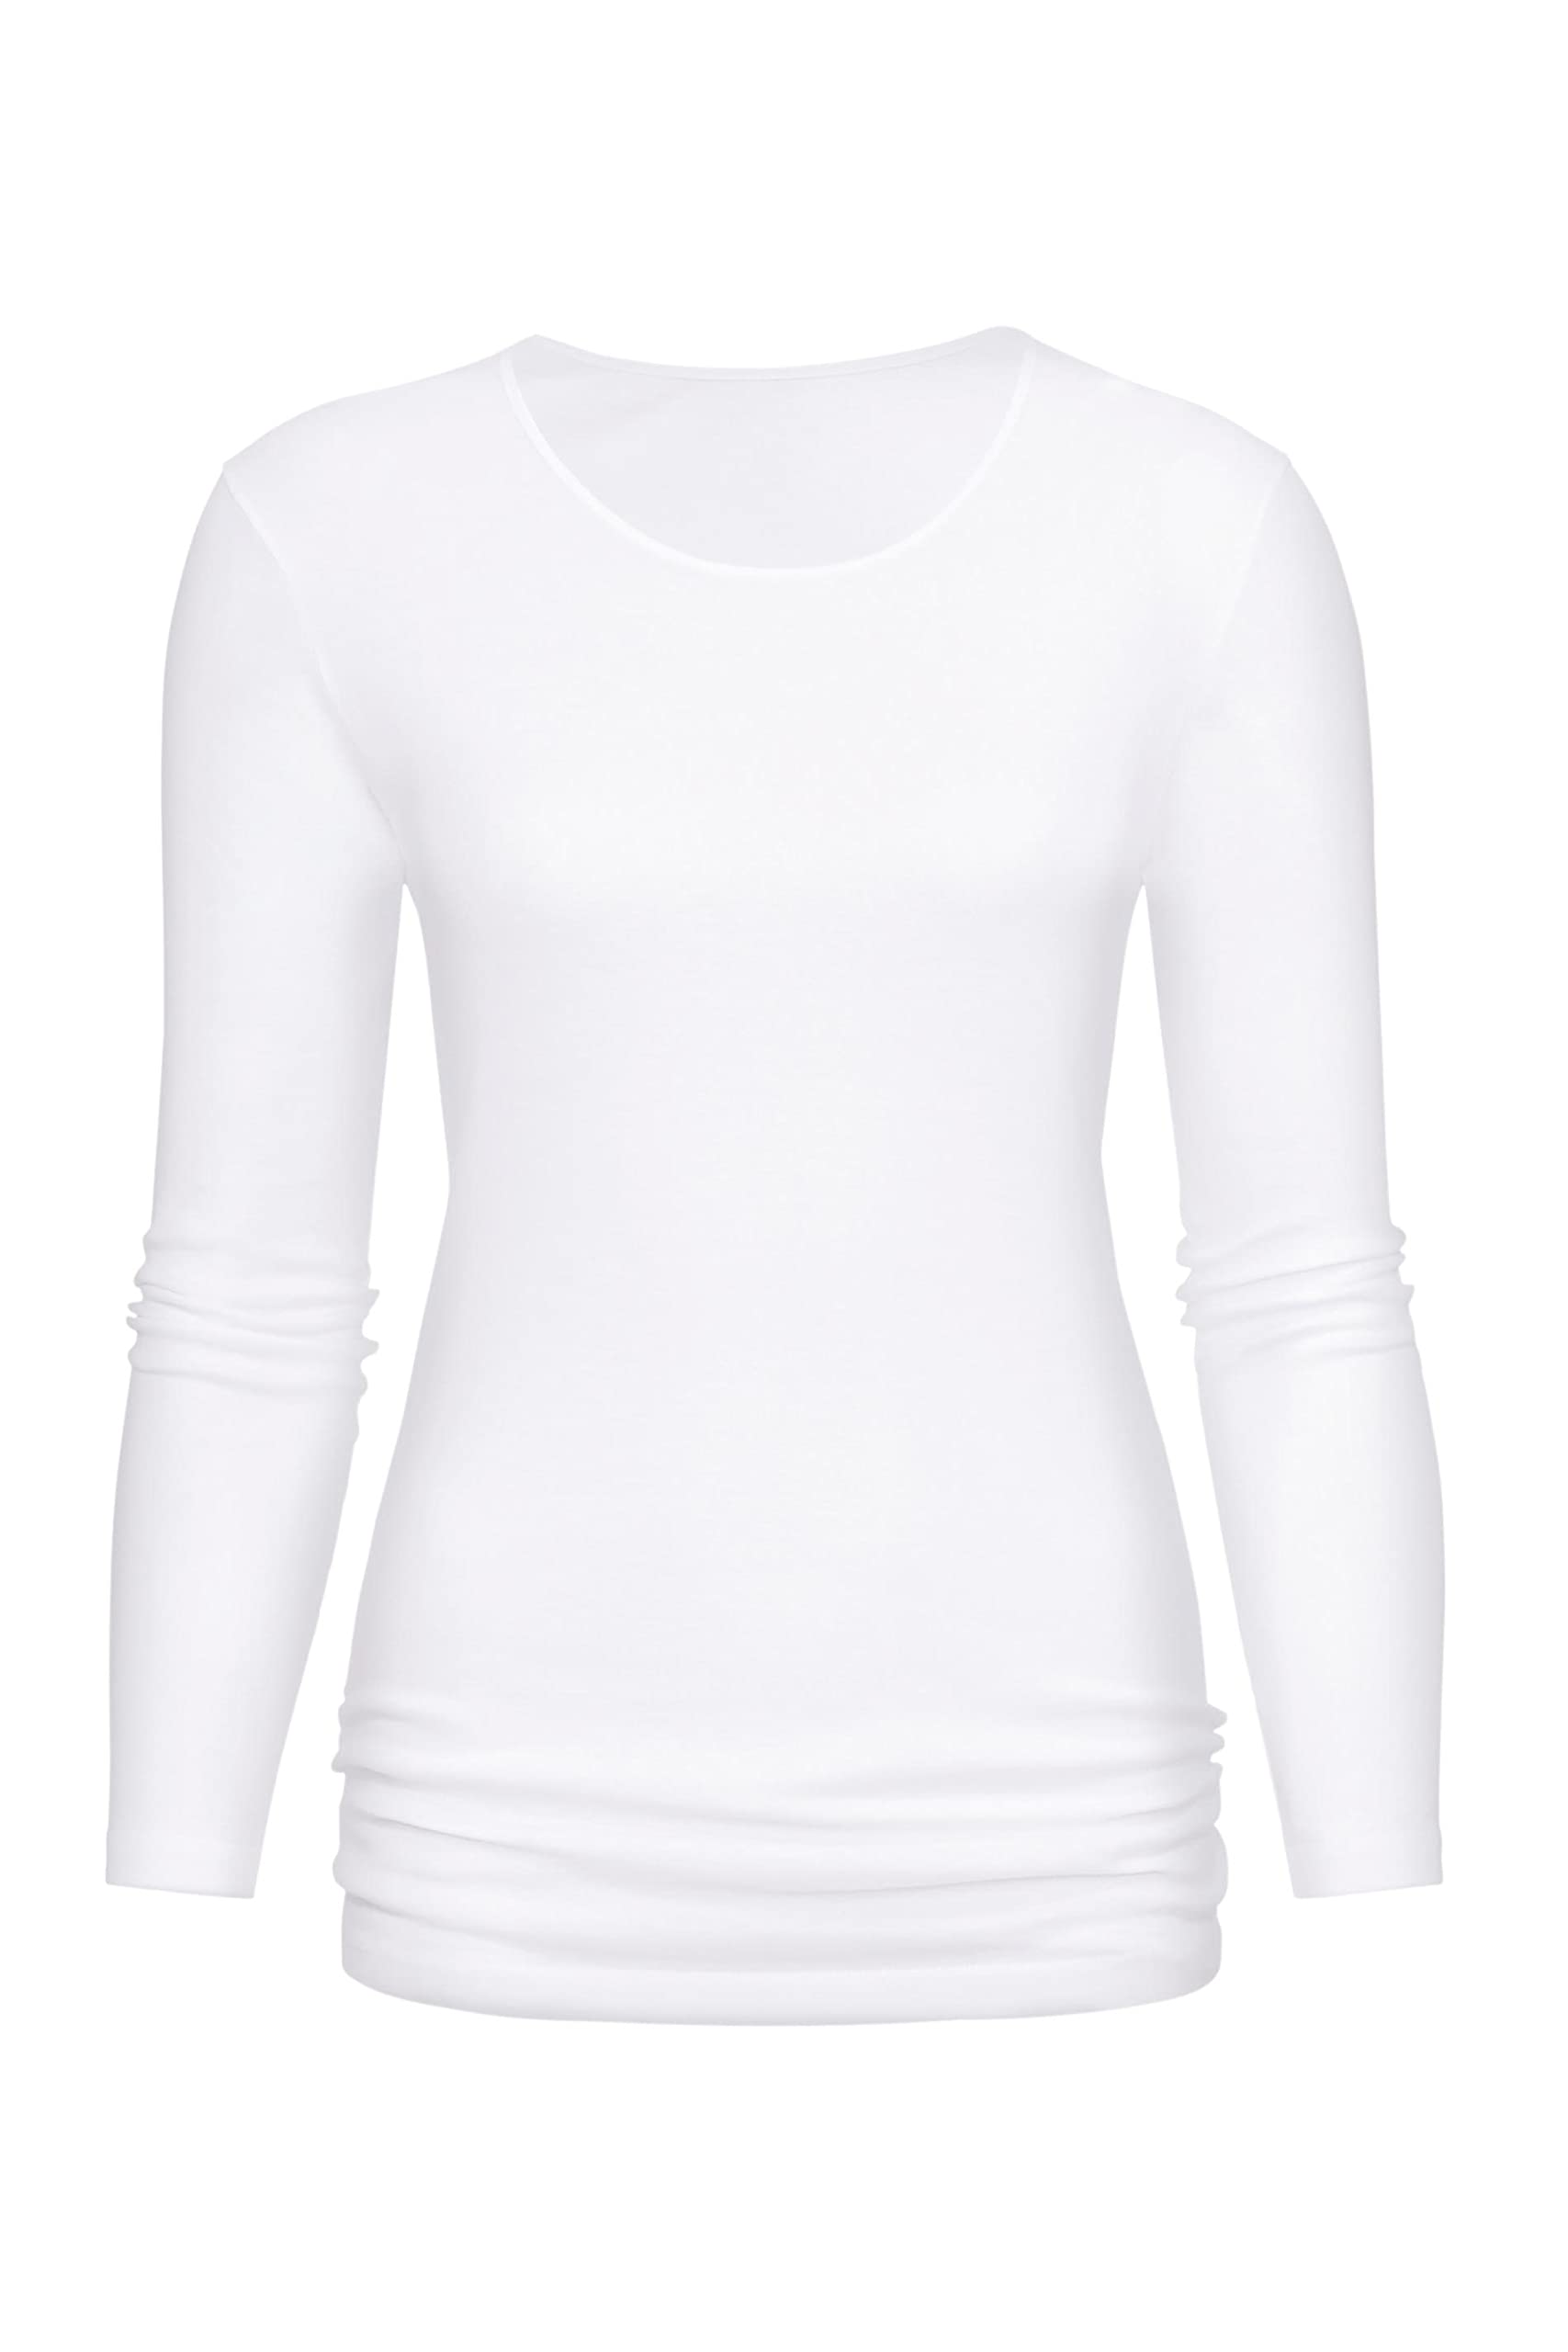 Mey Tagwäsche Serie Noblesse Damen Shirts 1/1 Arm Weiss L(42)